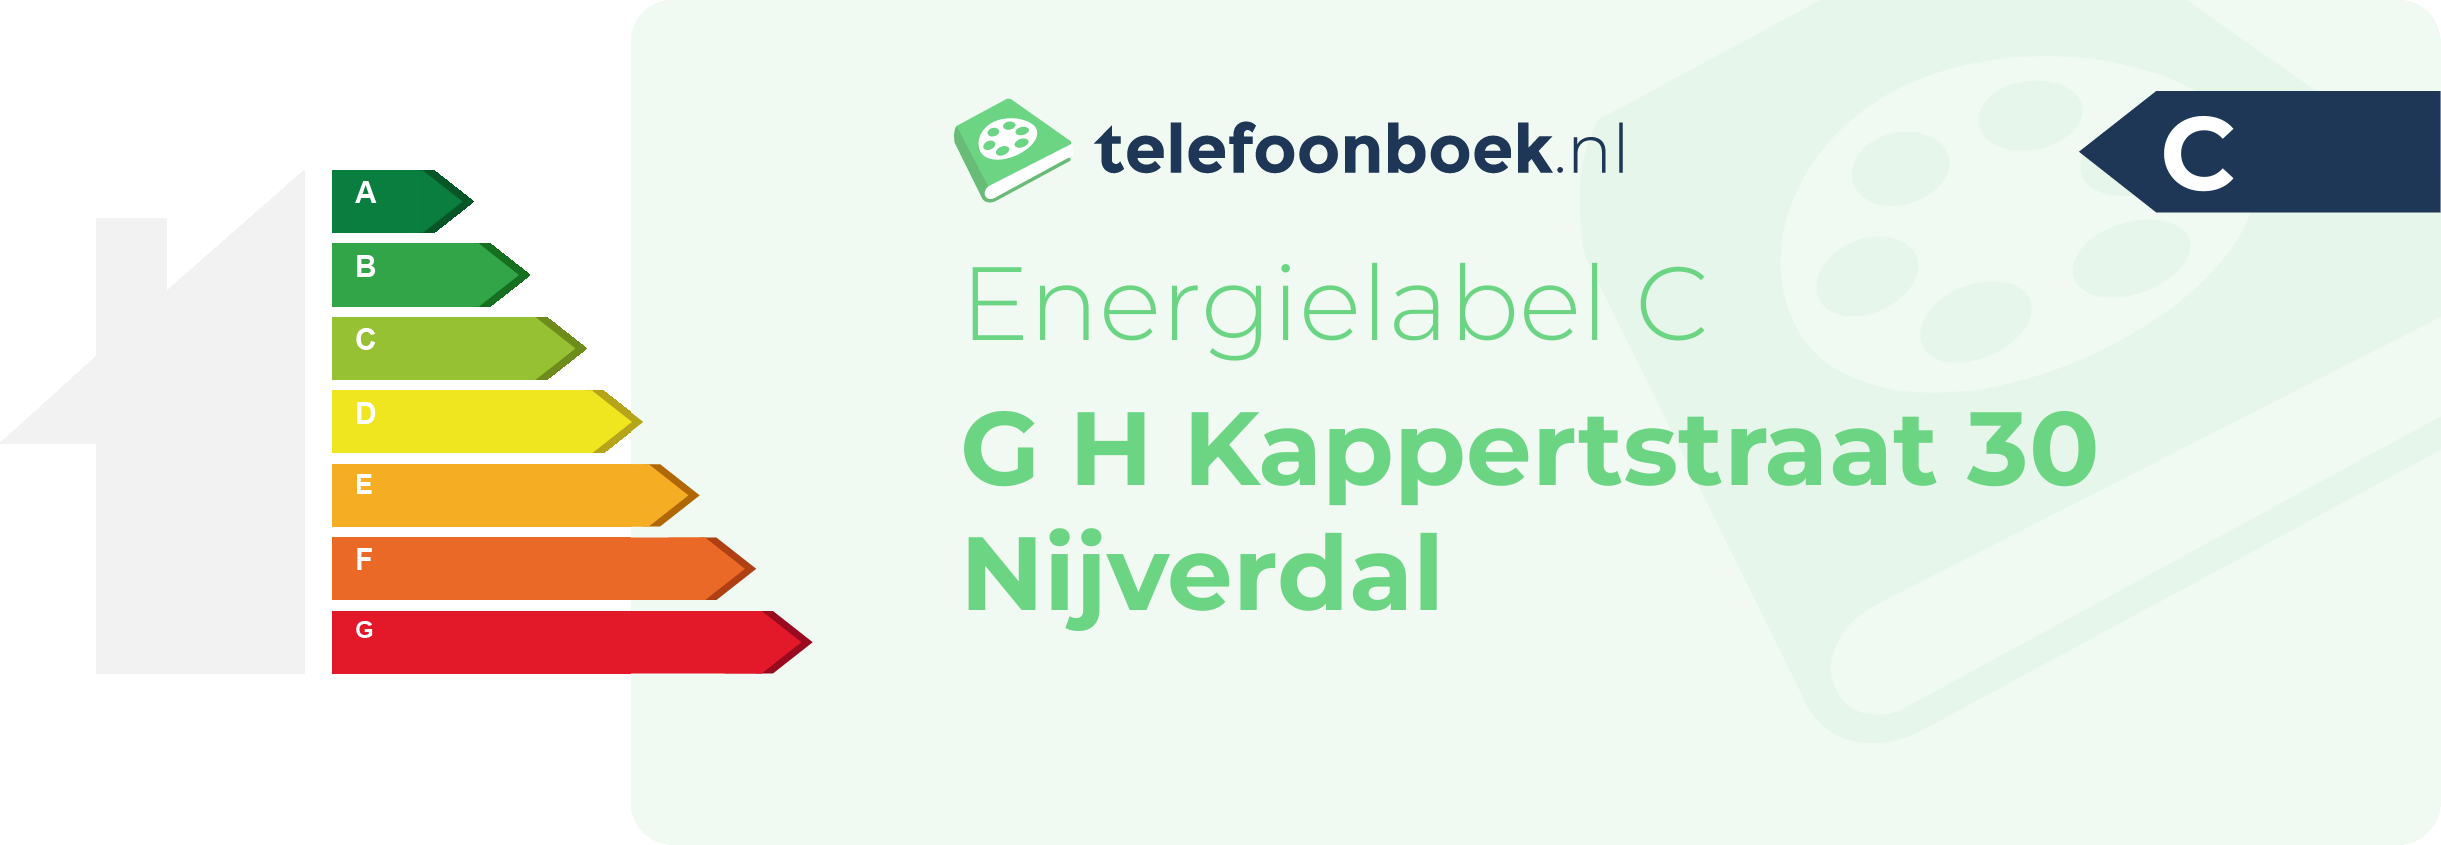 Energielabel G H Kappertstraat 30 Nijverdal